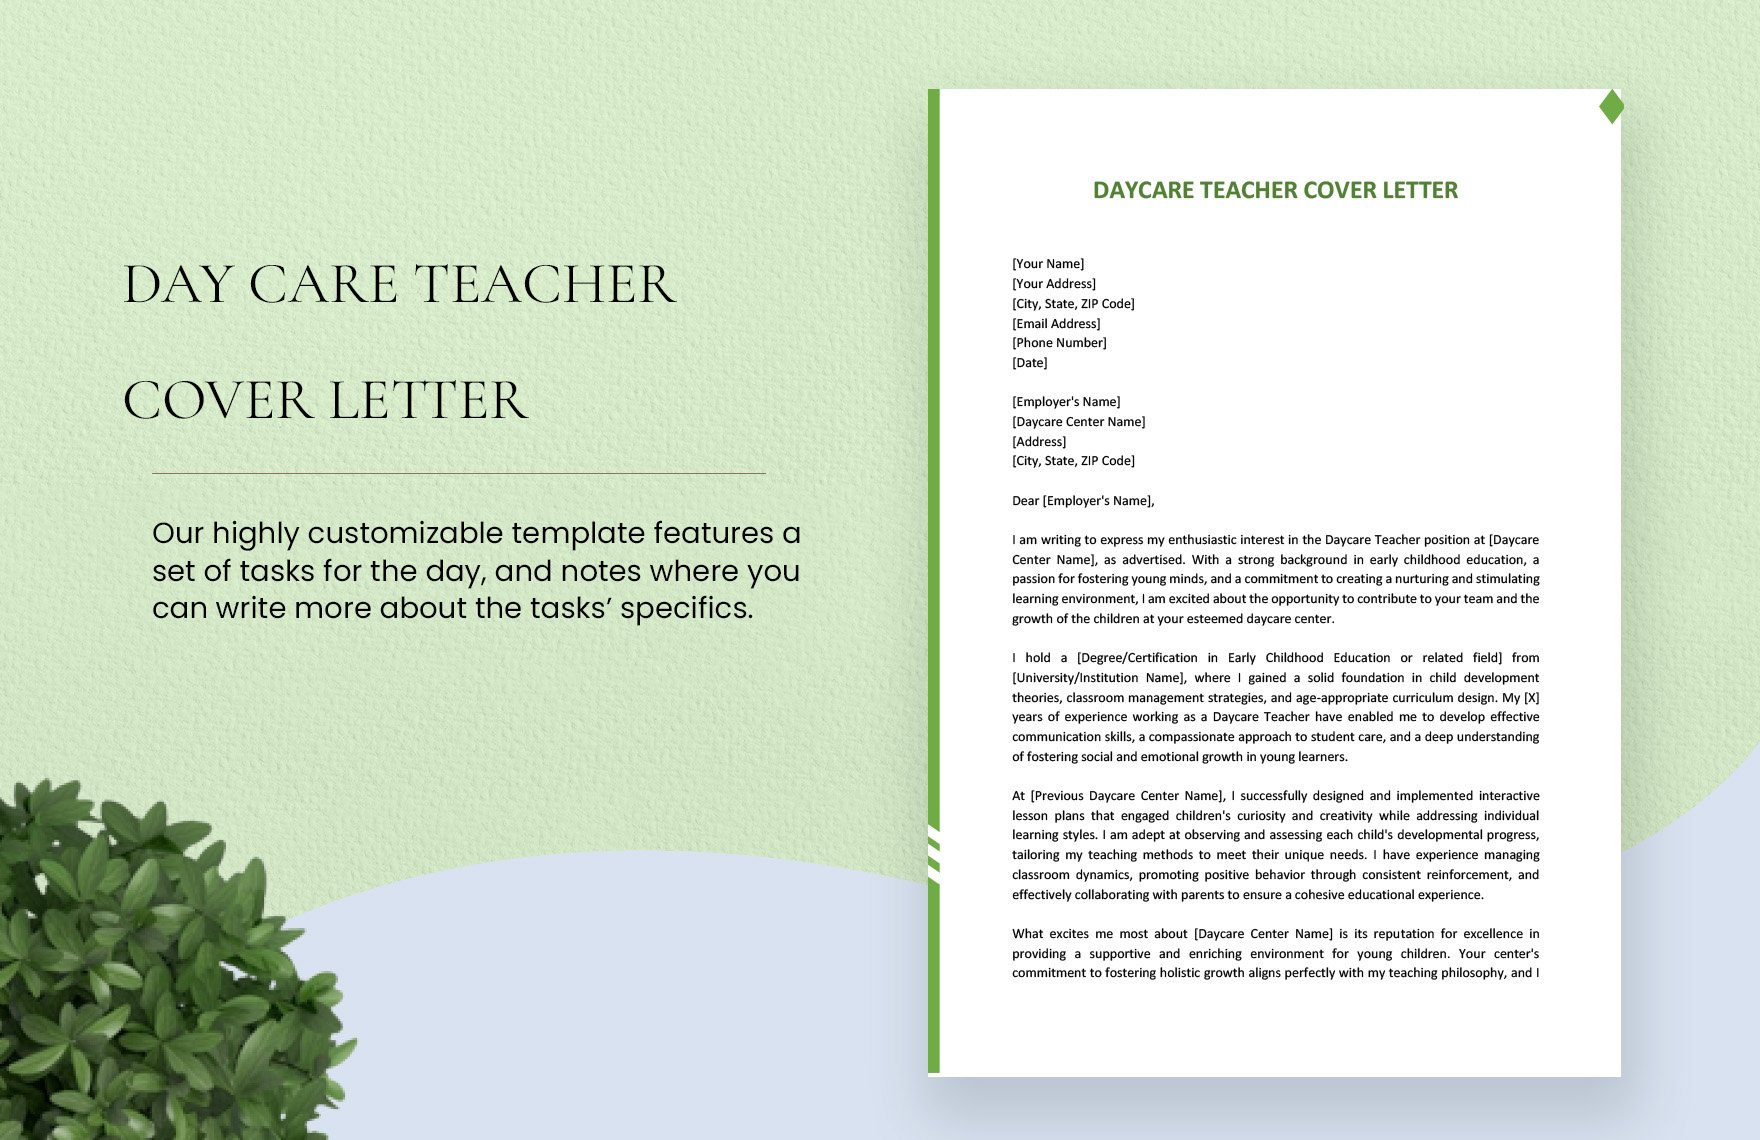 Daycare Teacher Cover Letter